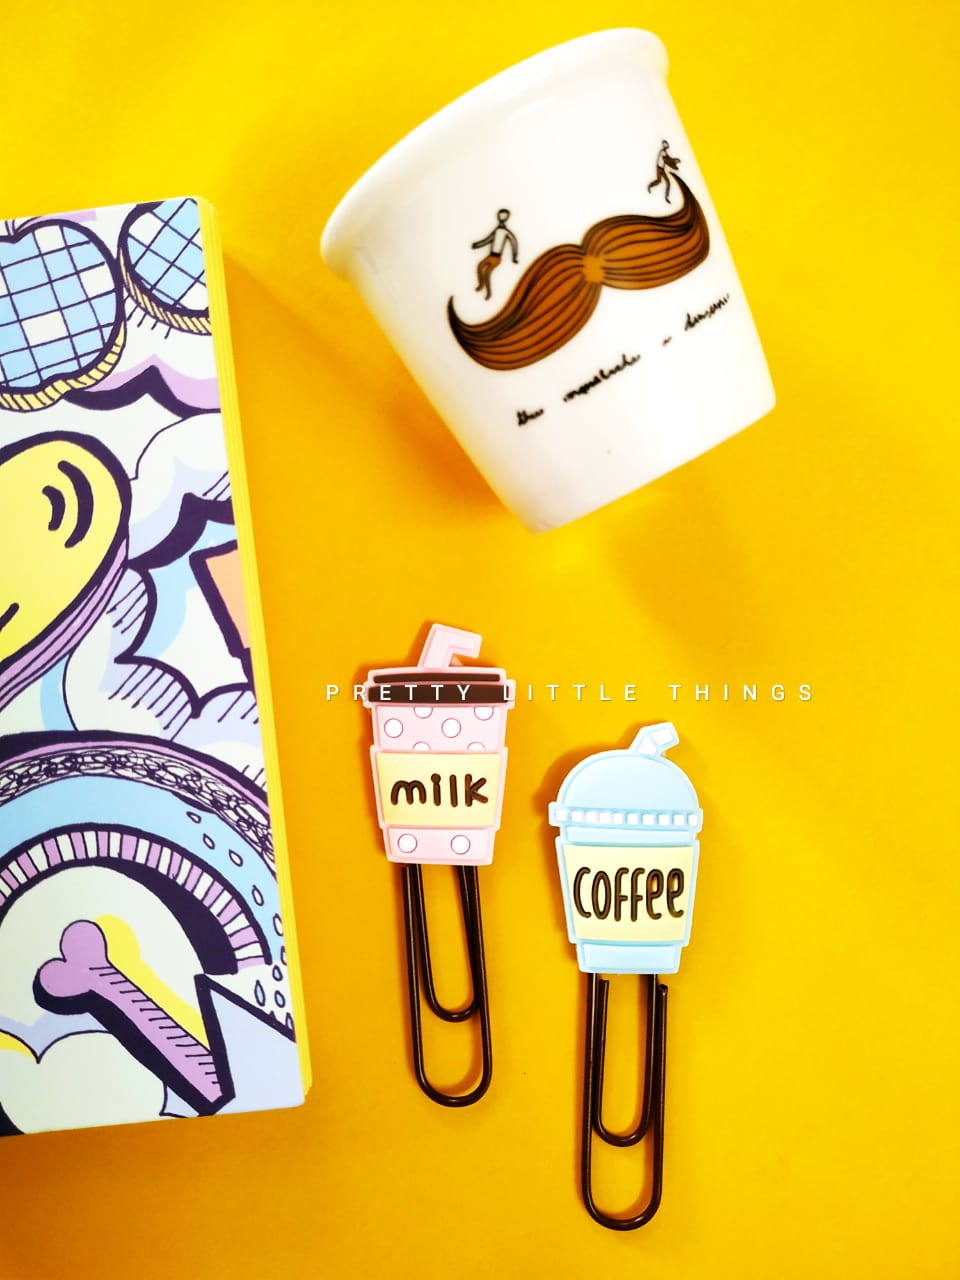 Coffee-MilkShake theme Bookmarks